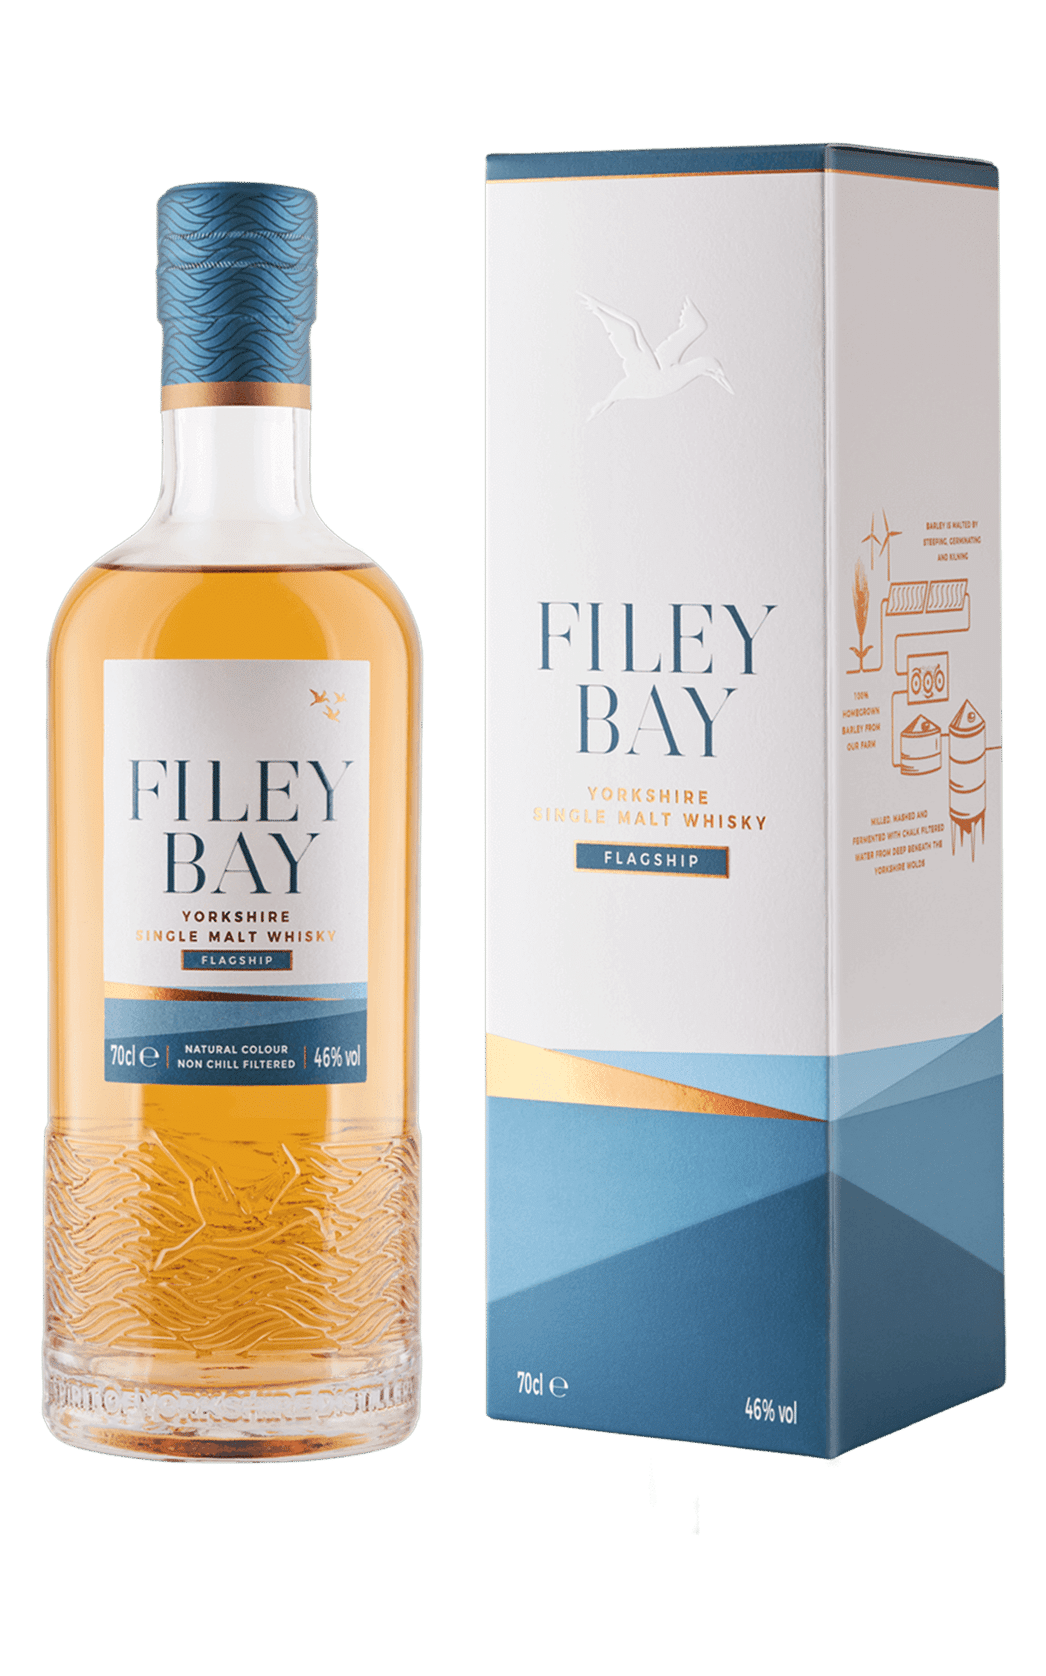 Filey Bay Yorkshire Single Malt Whisky - Flagship